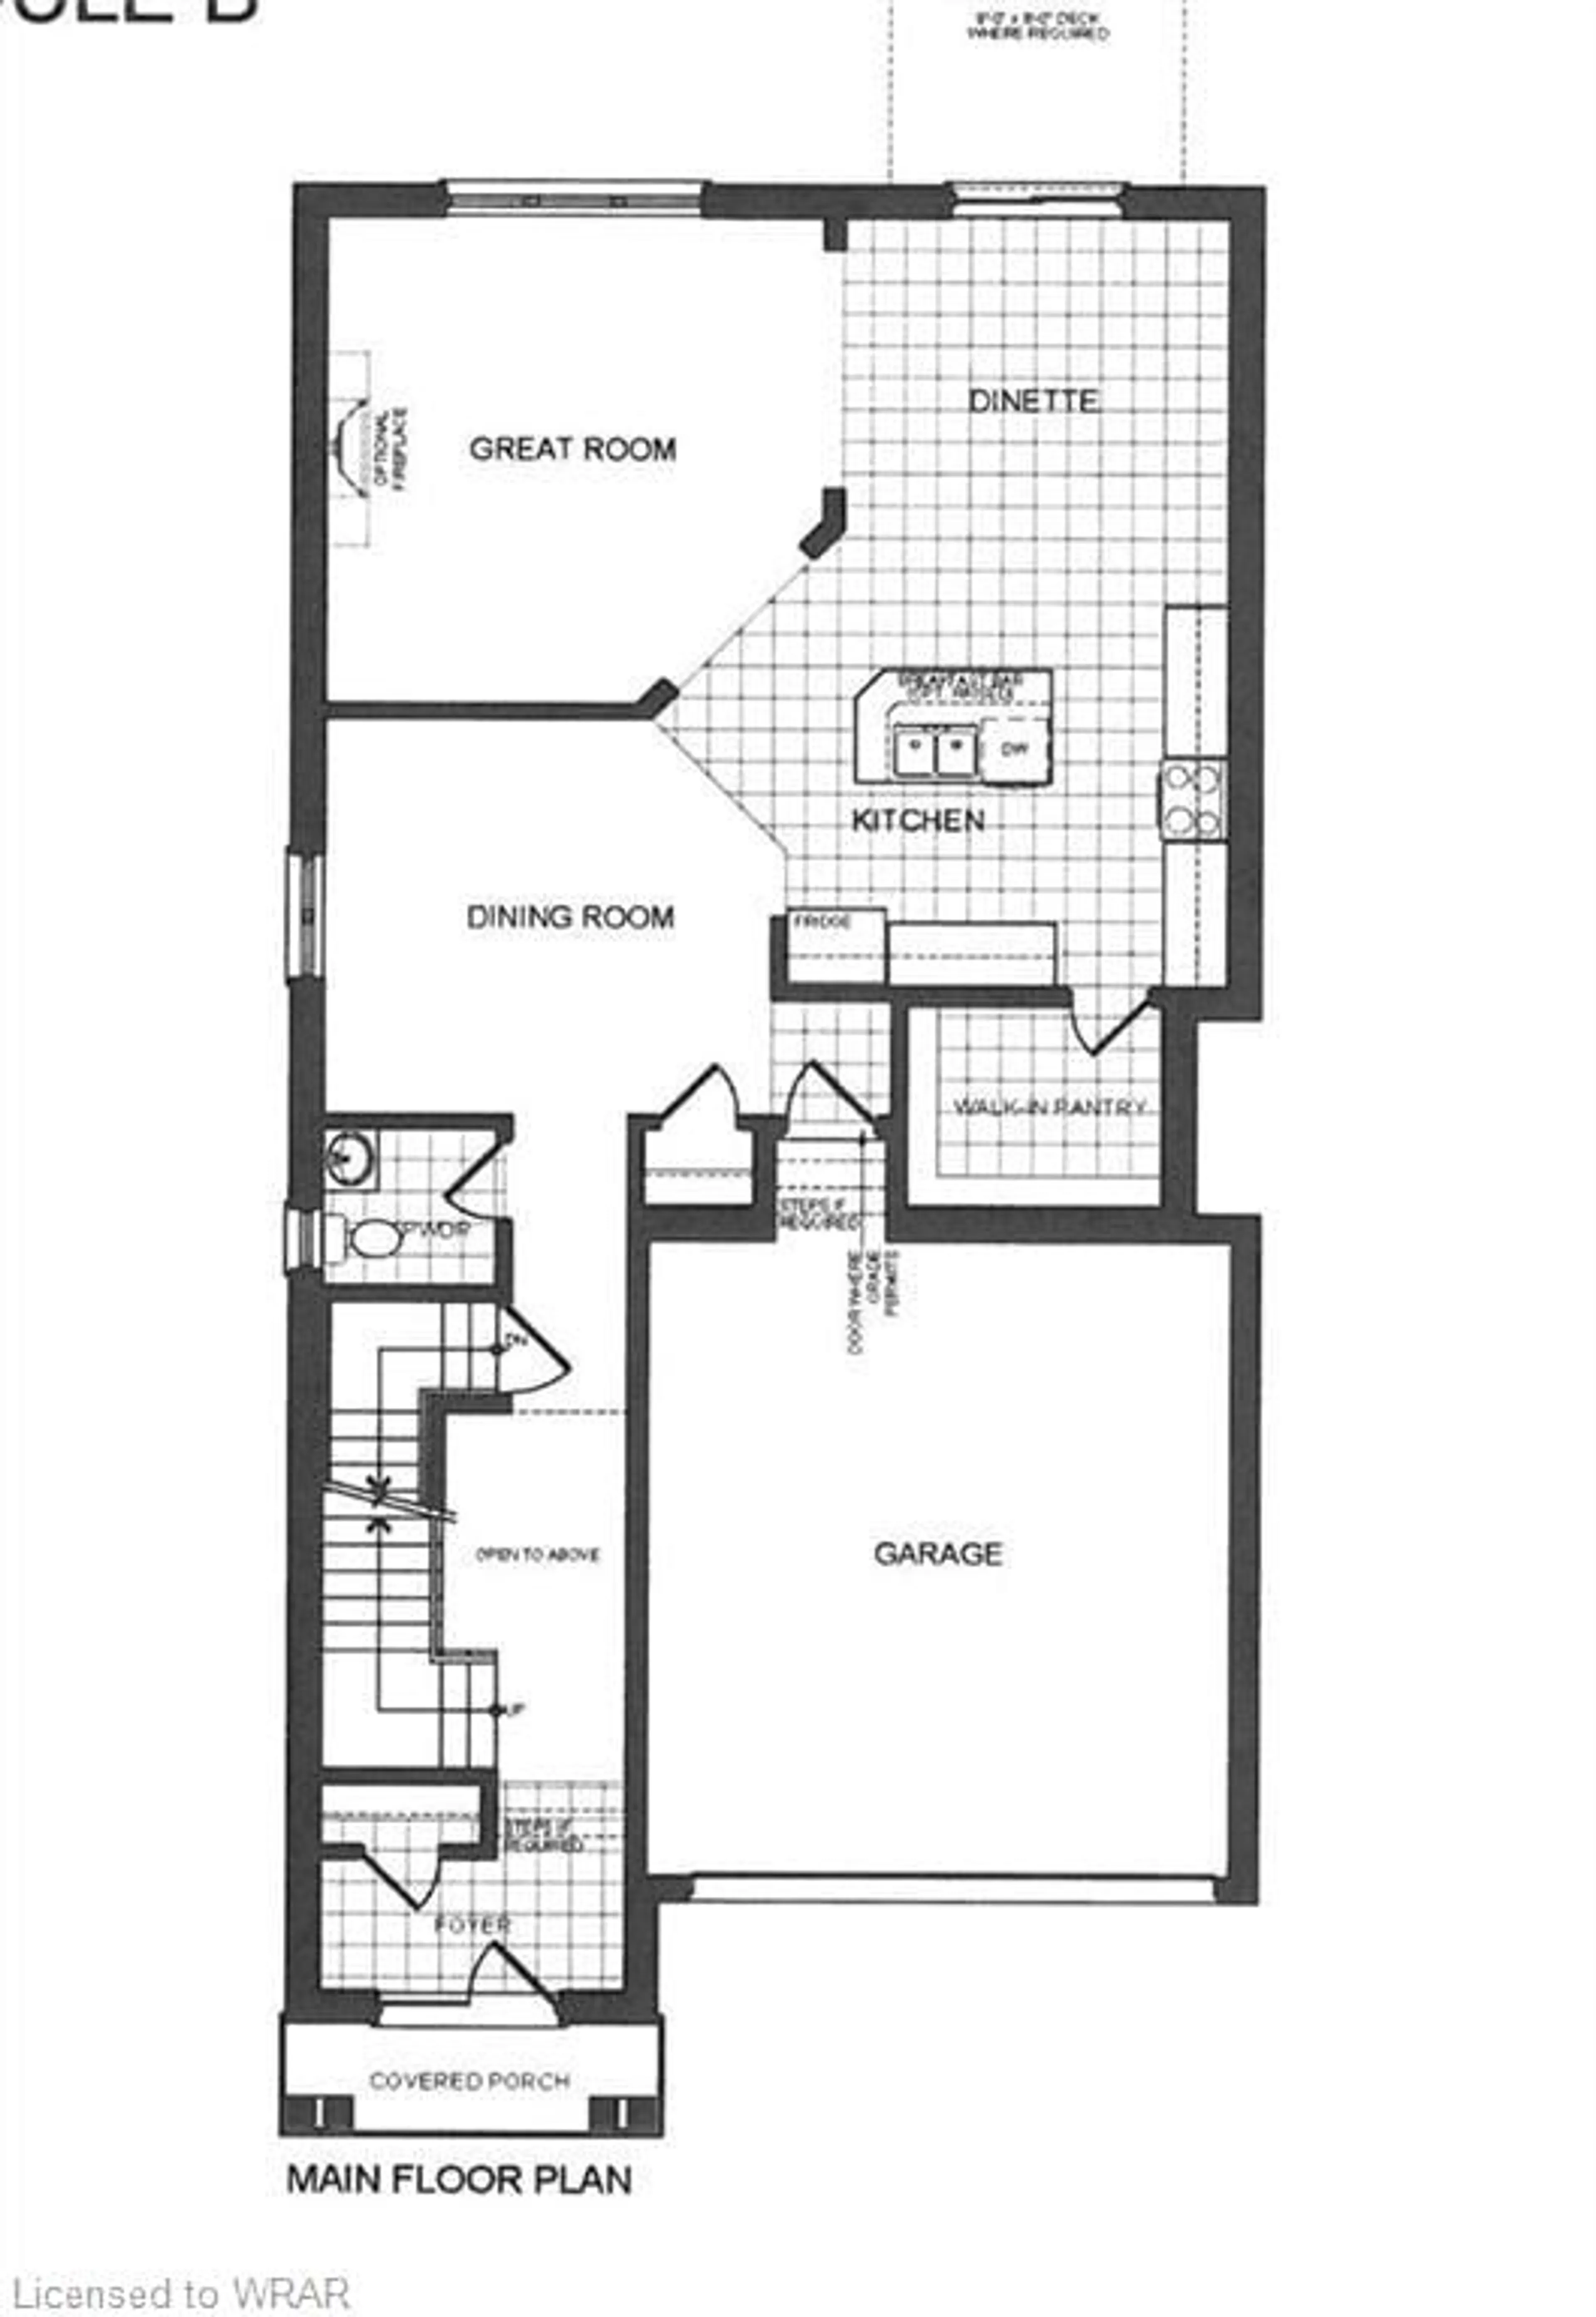 Floor plan for LOT 279 Hitchman St, Paris Ontario N3L 3E3